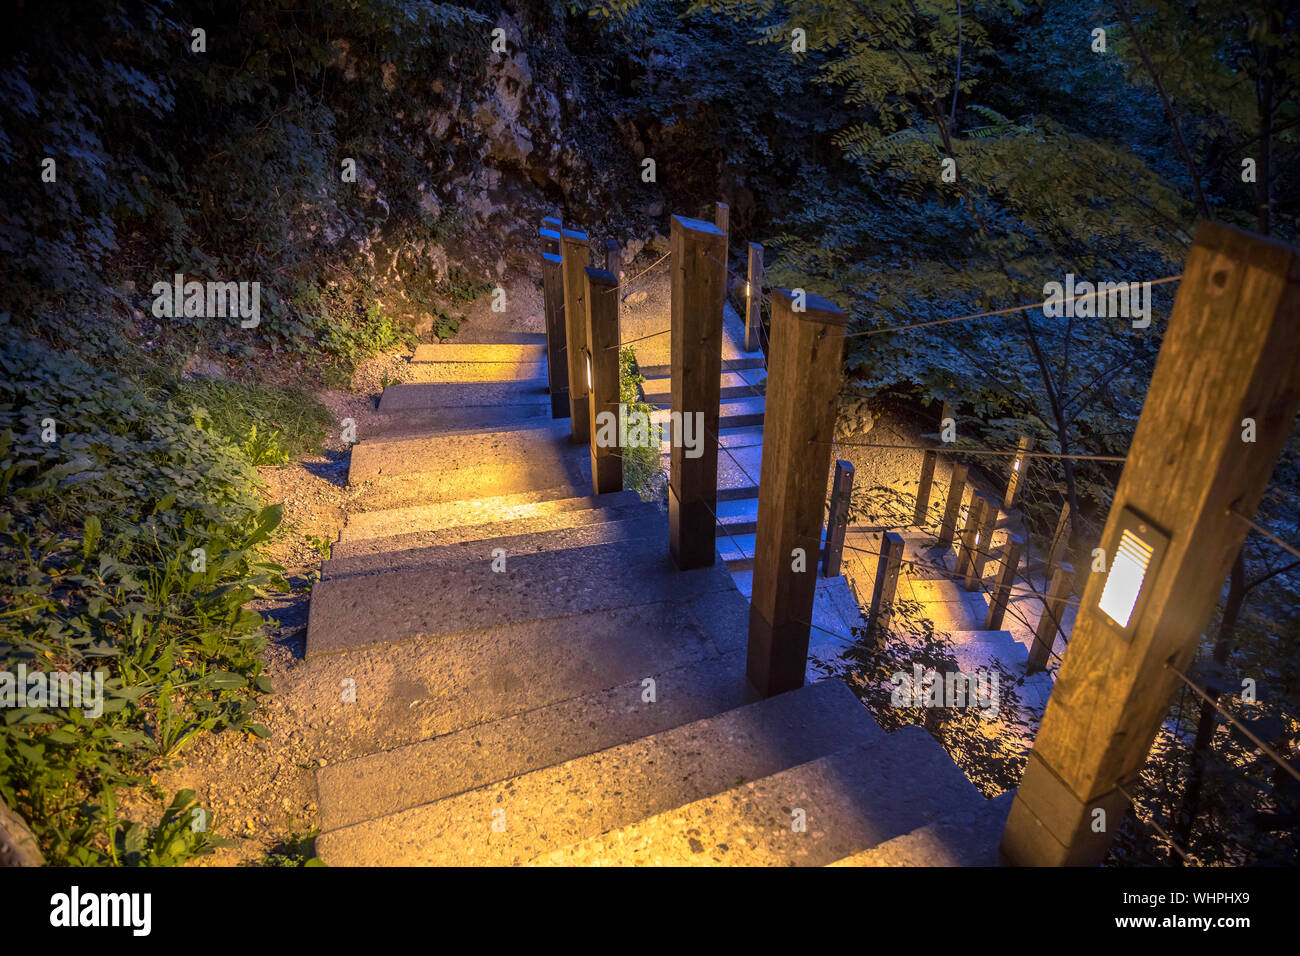 Illuminated outdoor Staircase down rocky mountain park at night Stock Photo